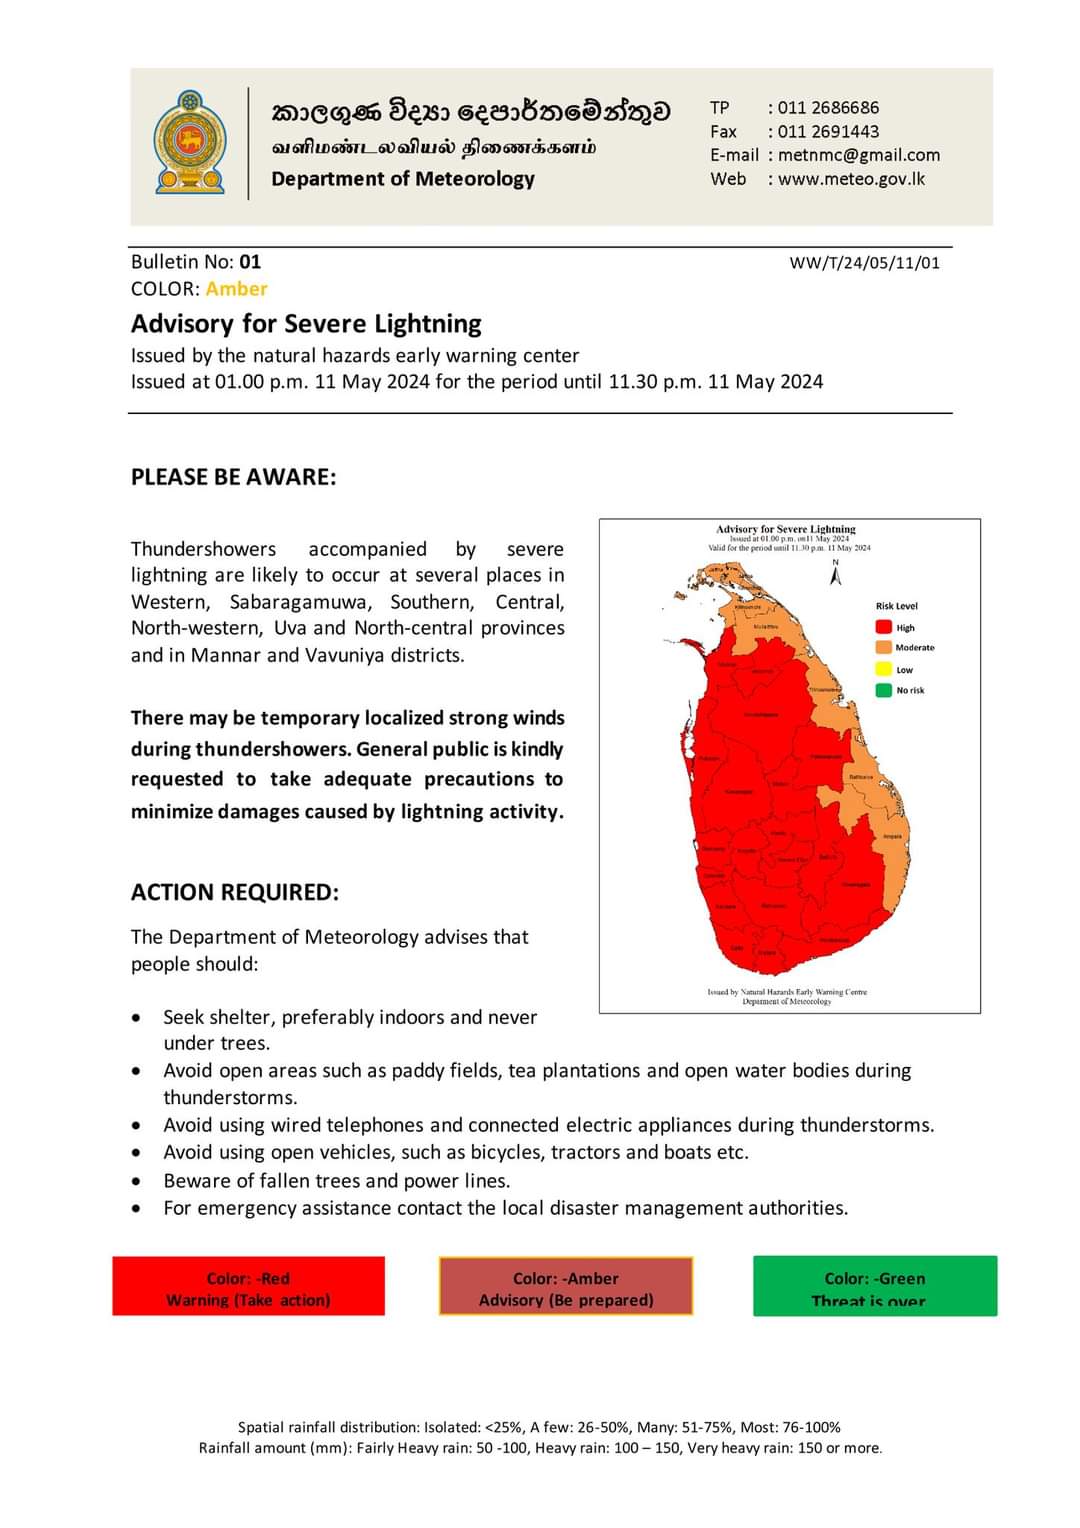 Severe lightning advisory issued for several areas